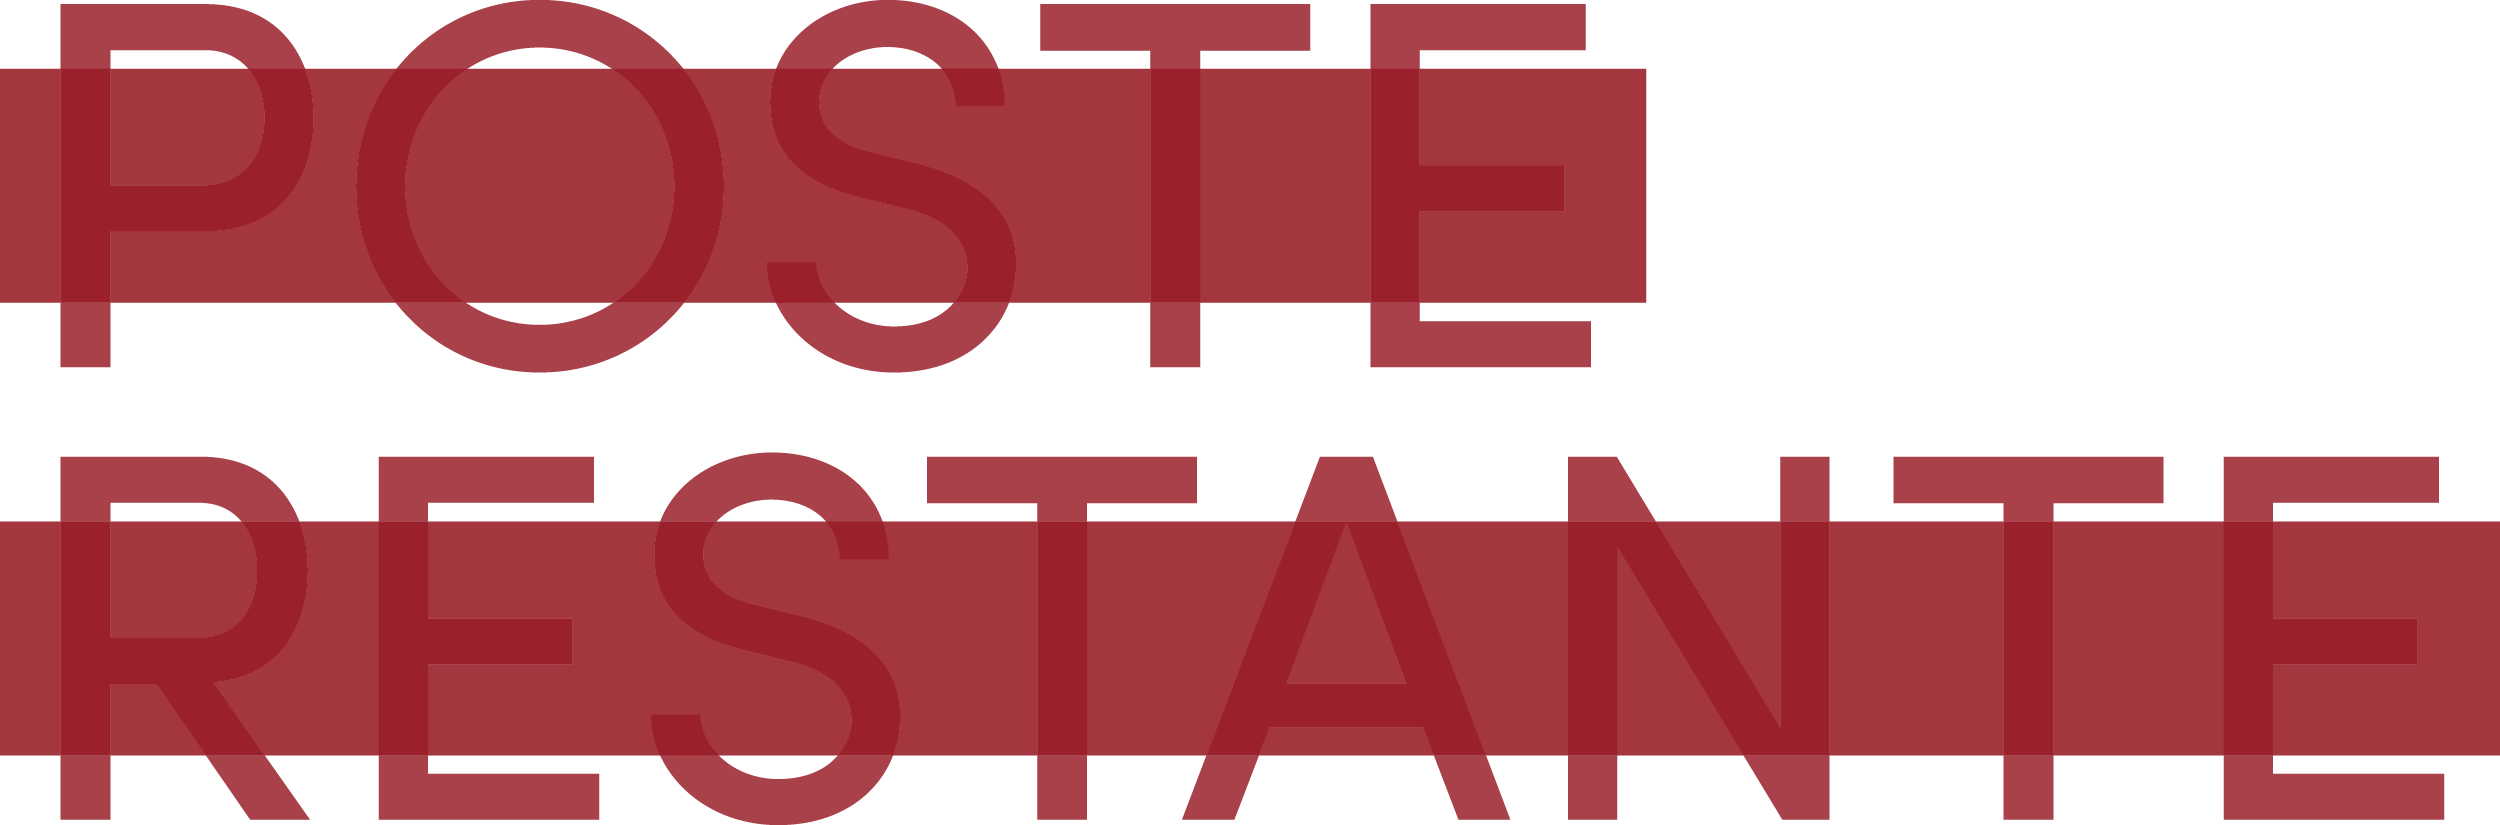 POSTE RESTANTE logo